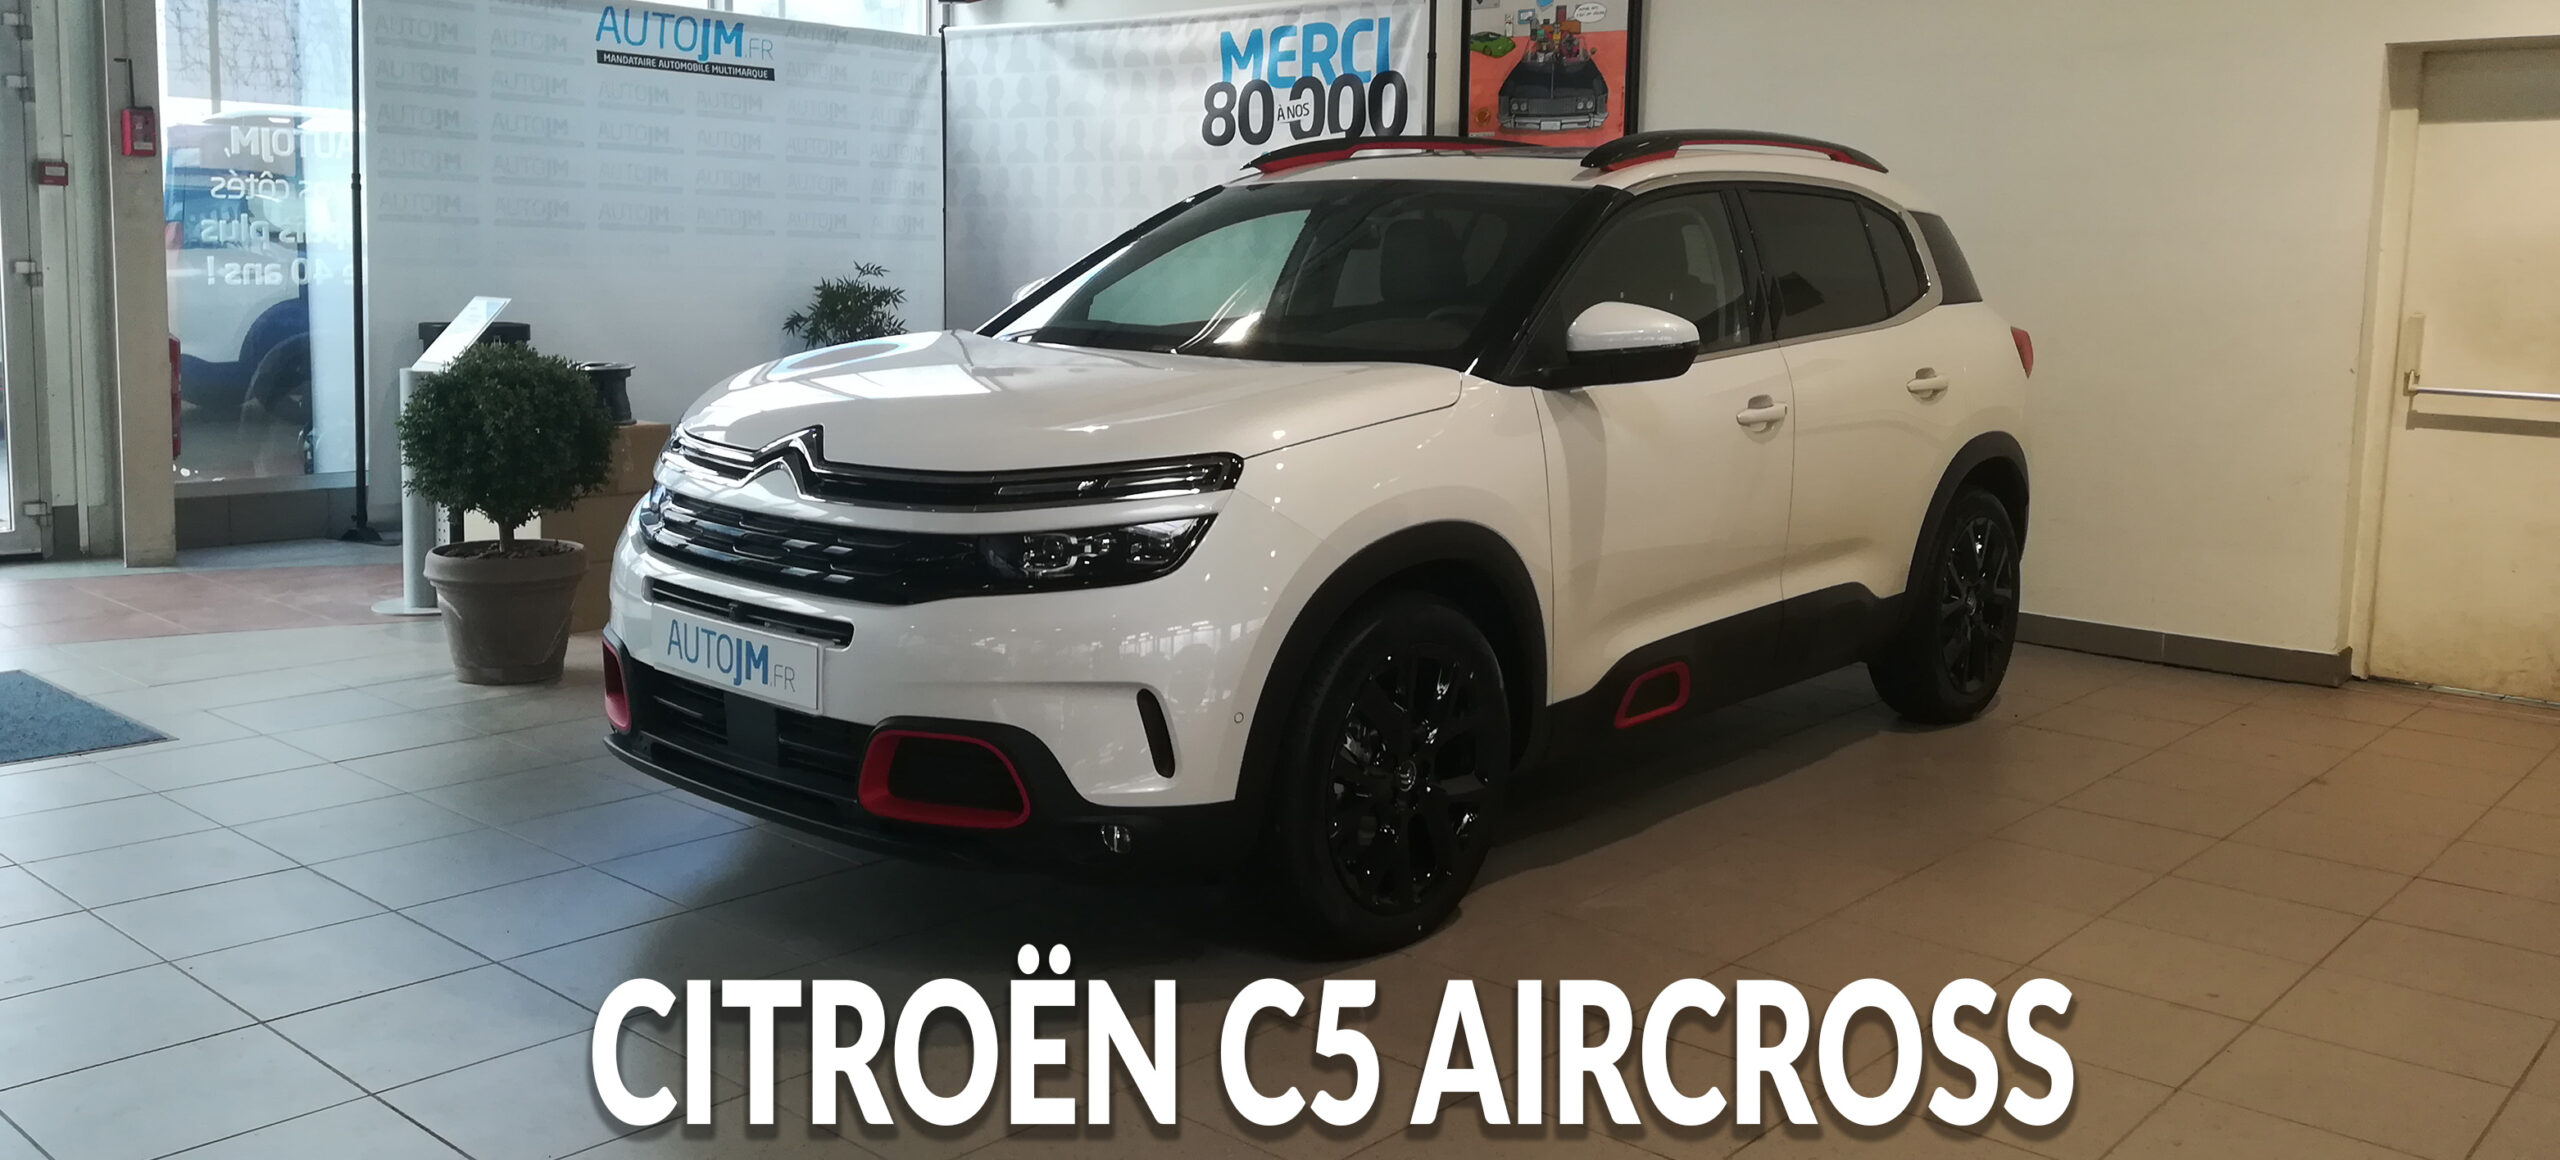 Citroën C5 Aircross, SUV ultra-personnalisable